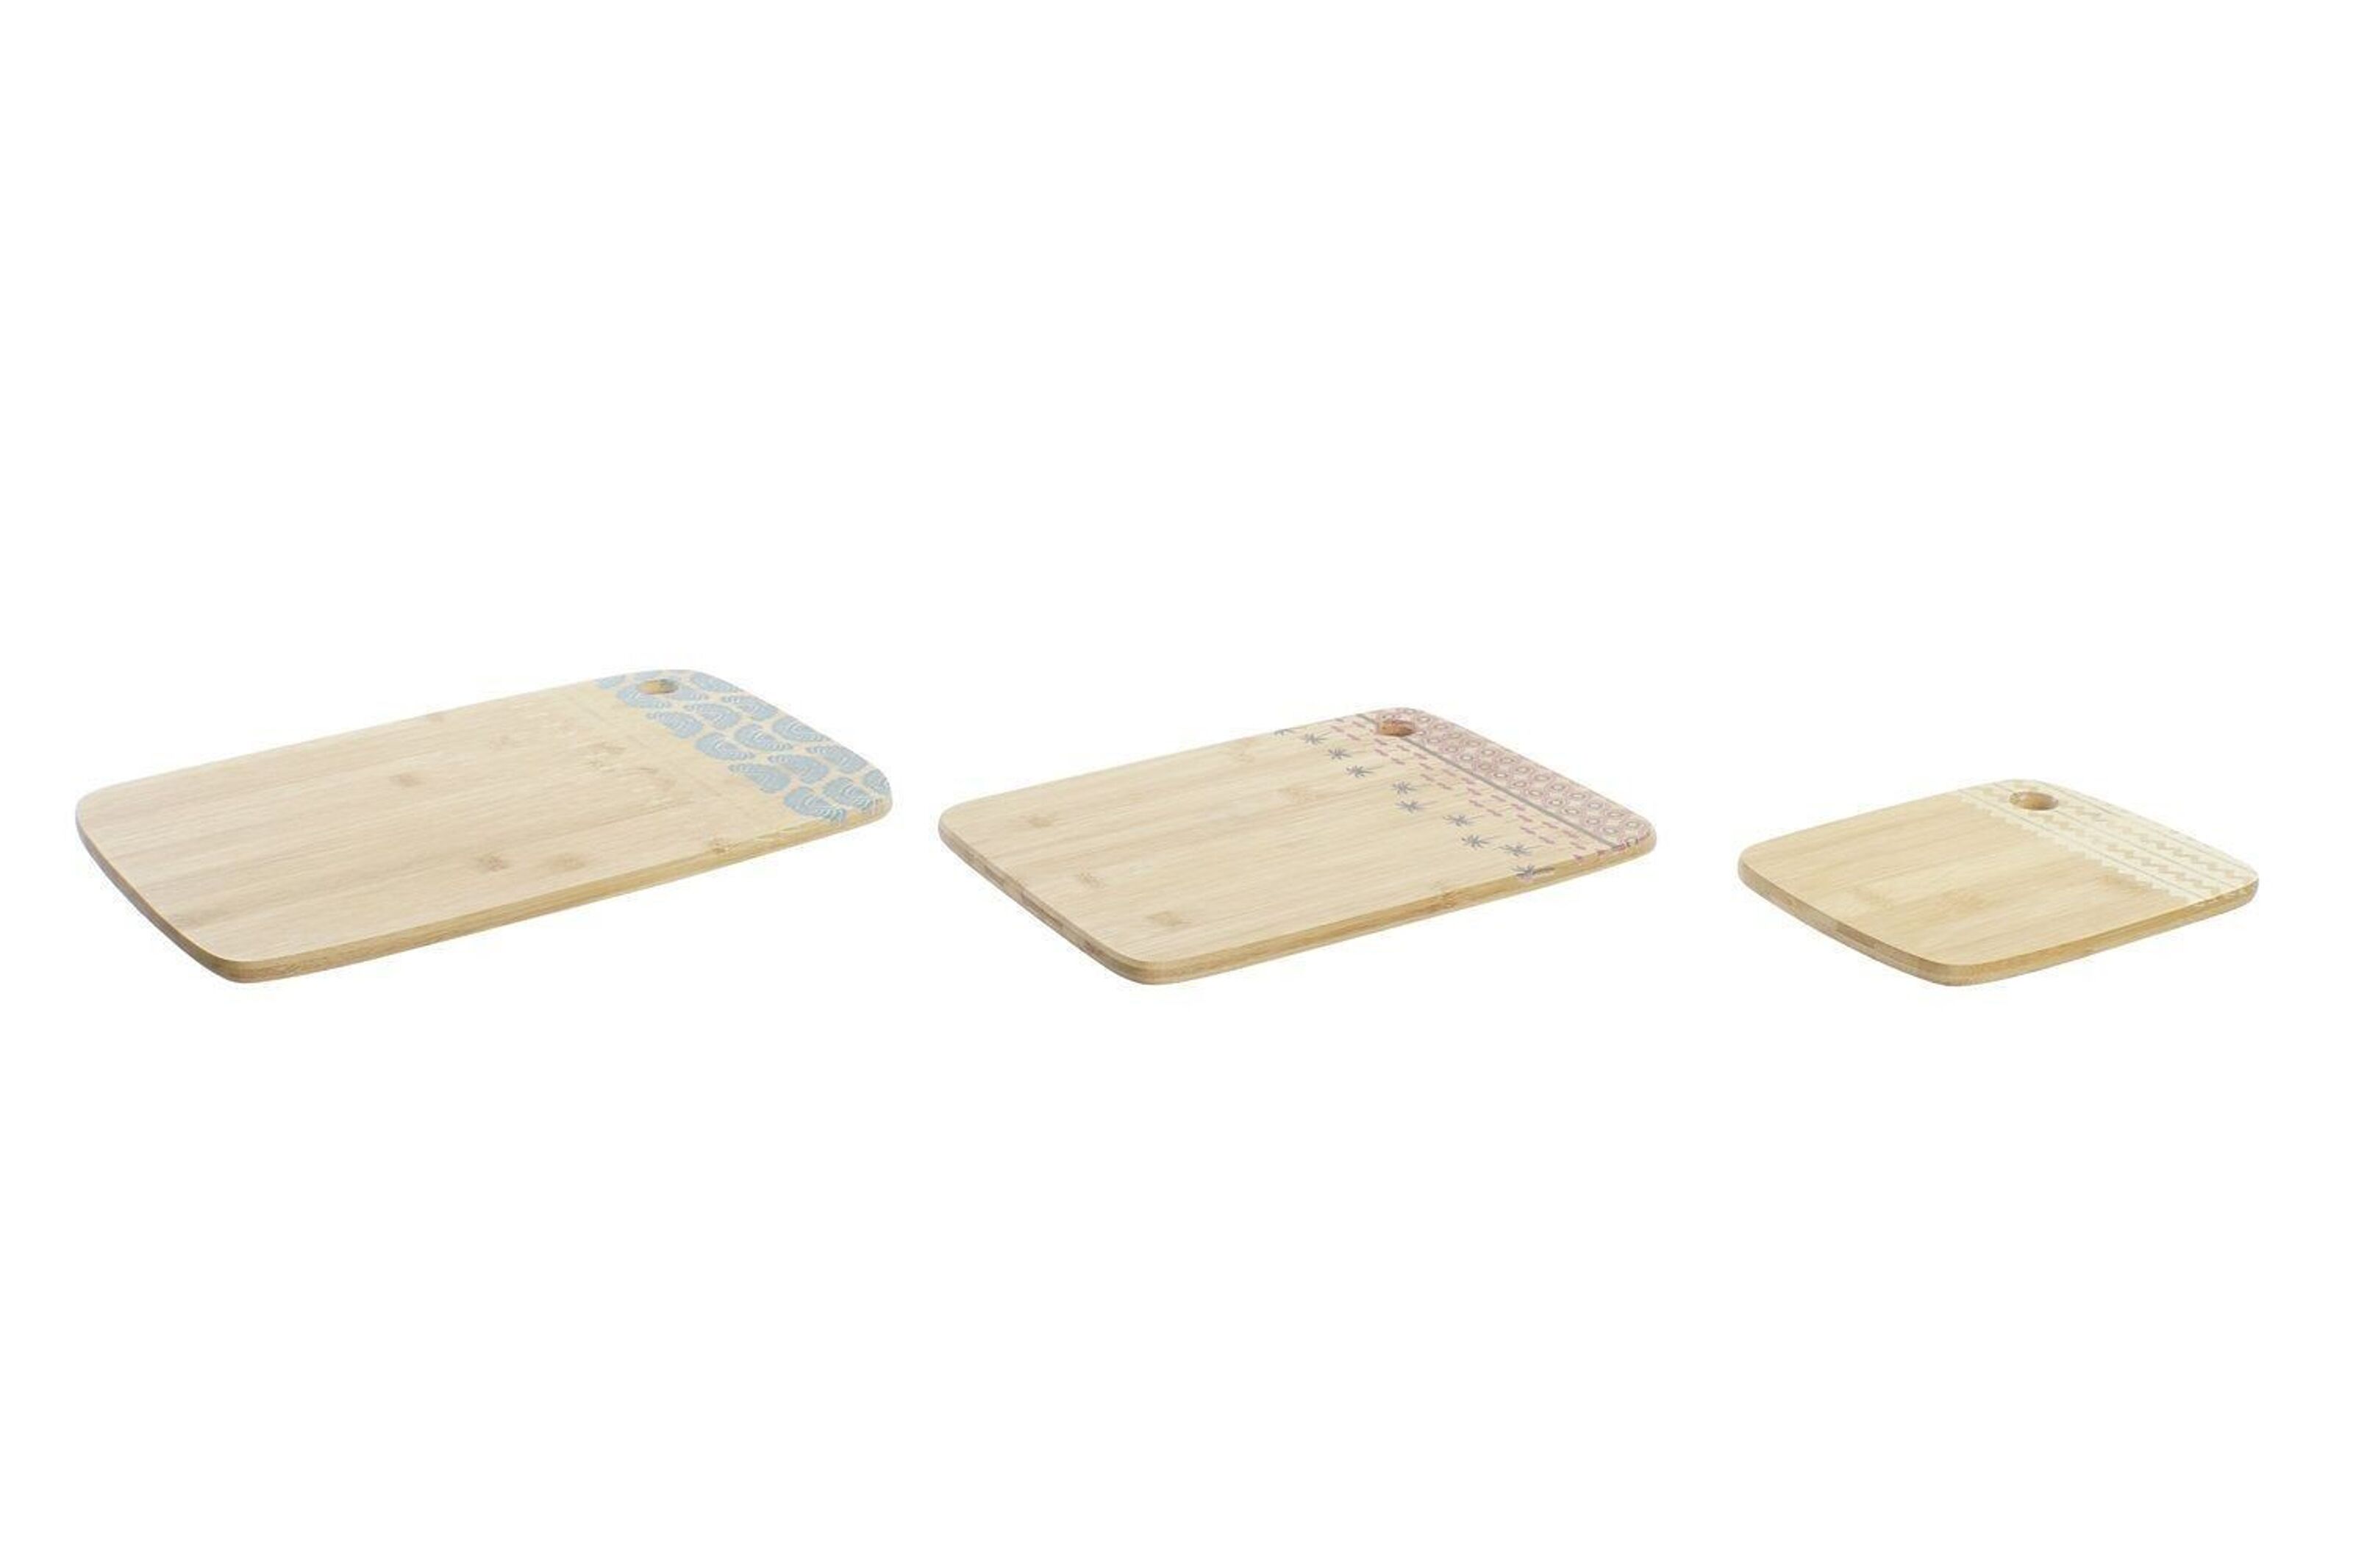 Tabla de picar de bambú ecológico - grande - 30 x 23cm - Tesoro